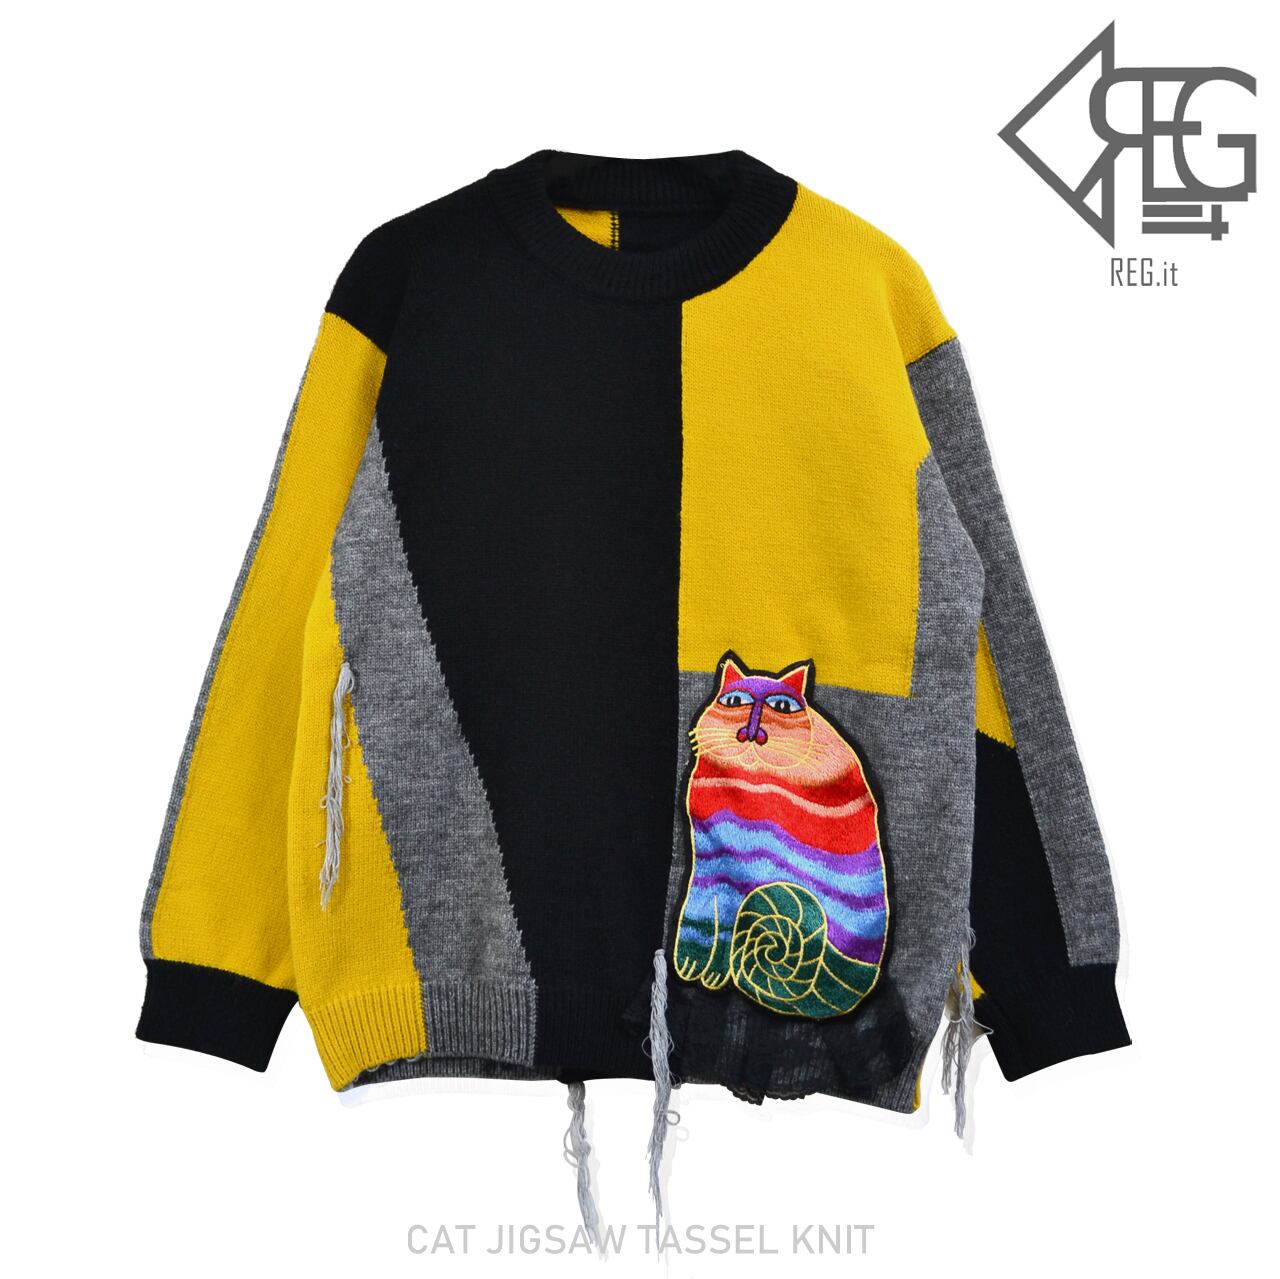 Regit 即納 Cat Jigsaw Tassel Knit 韓国ファッション ニット おしゃれ ネコ かわいい ユニーク ねこニット 10代代 Regit